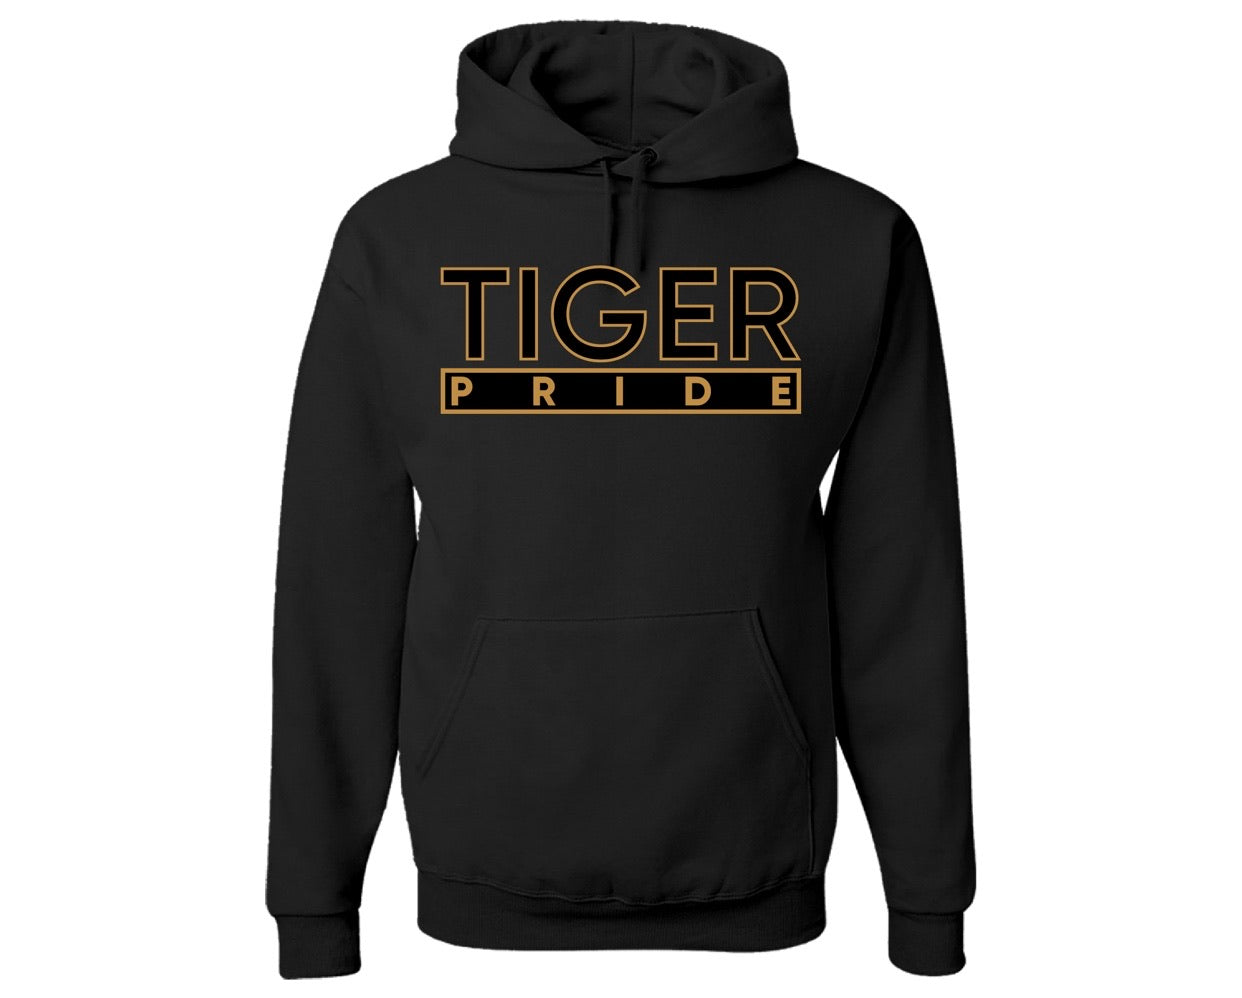 The “Tiger Pride” Hoodie/Crew in Black/Gold (LA)